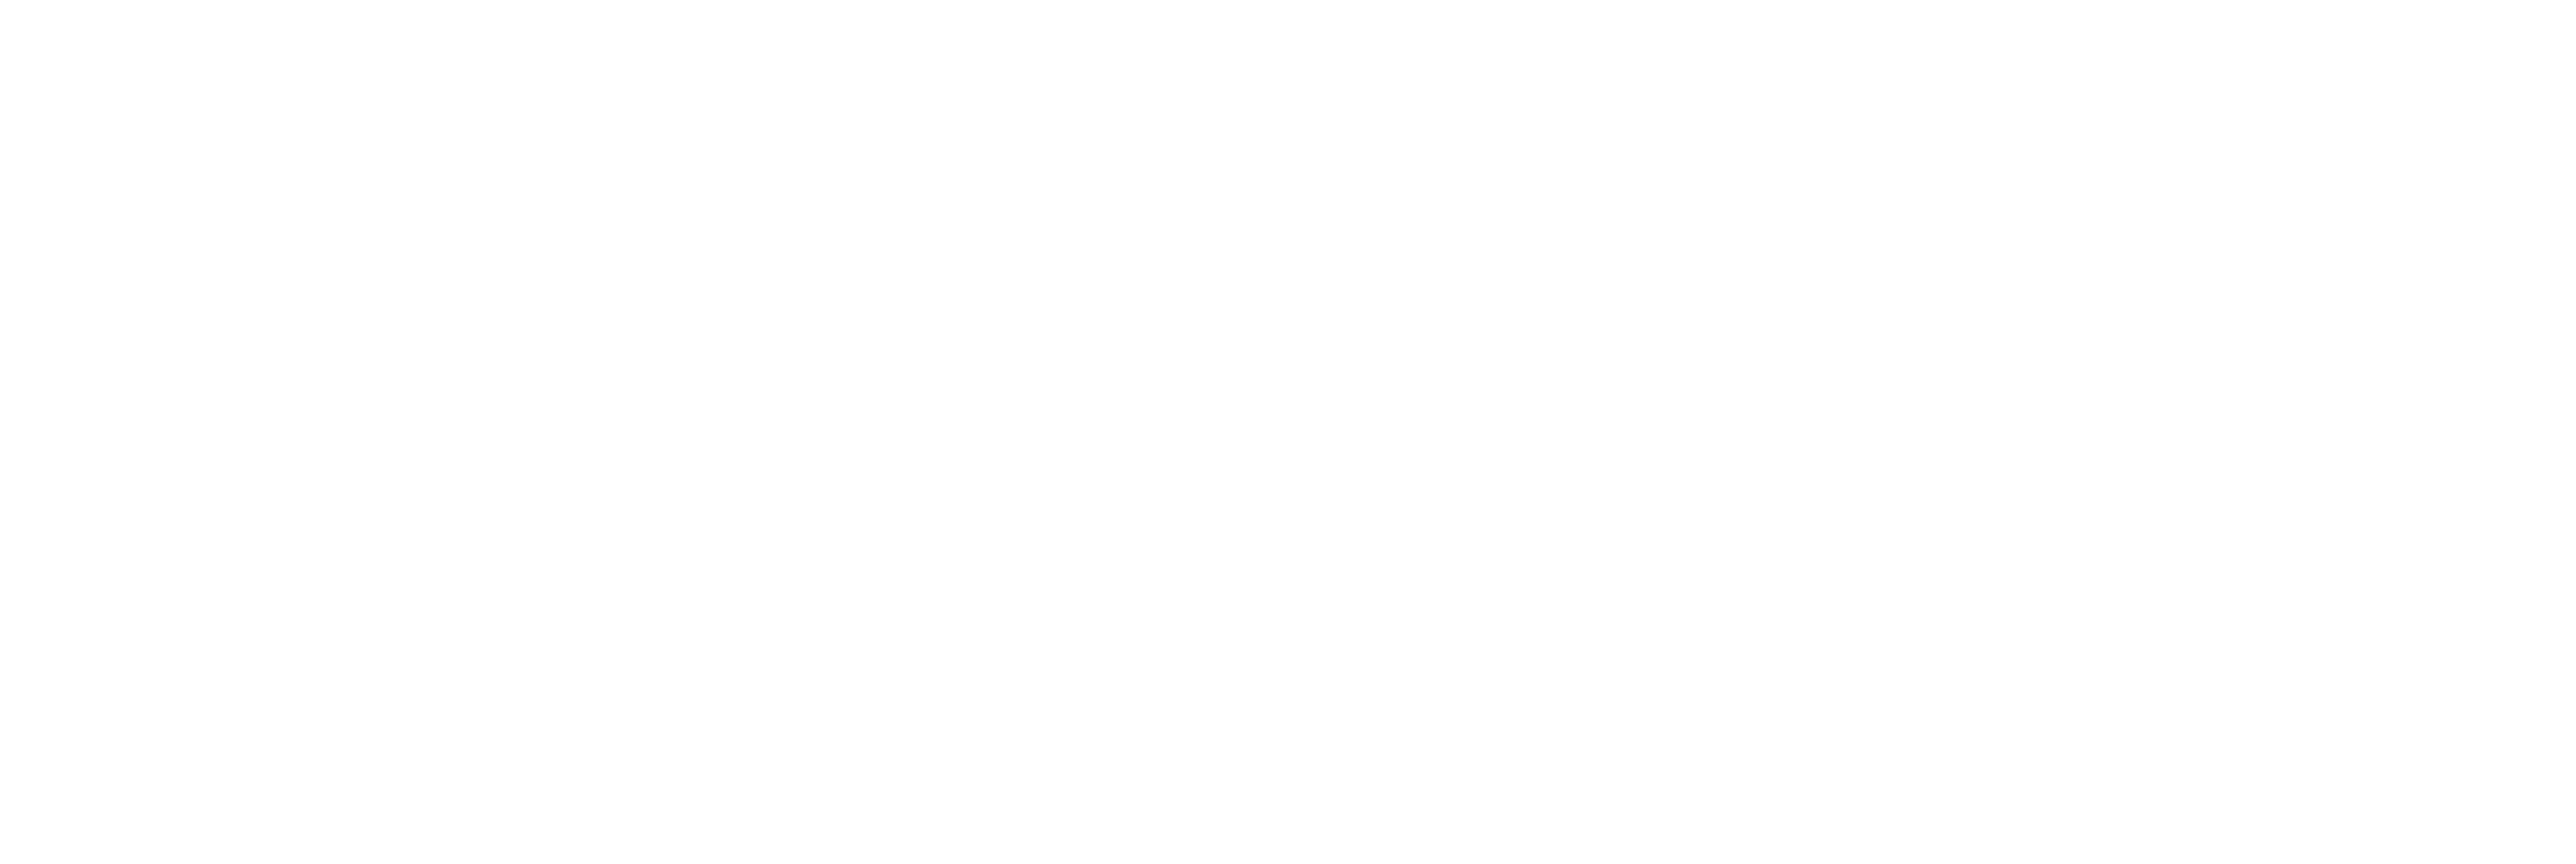 İnfluencer Reklam - İnfluencer Tanıtım